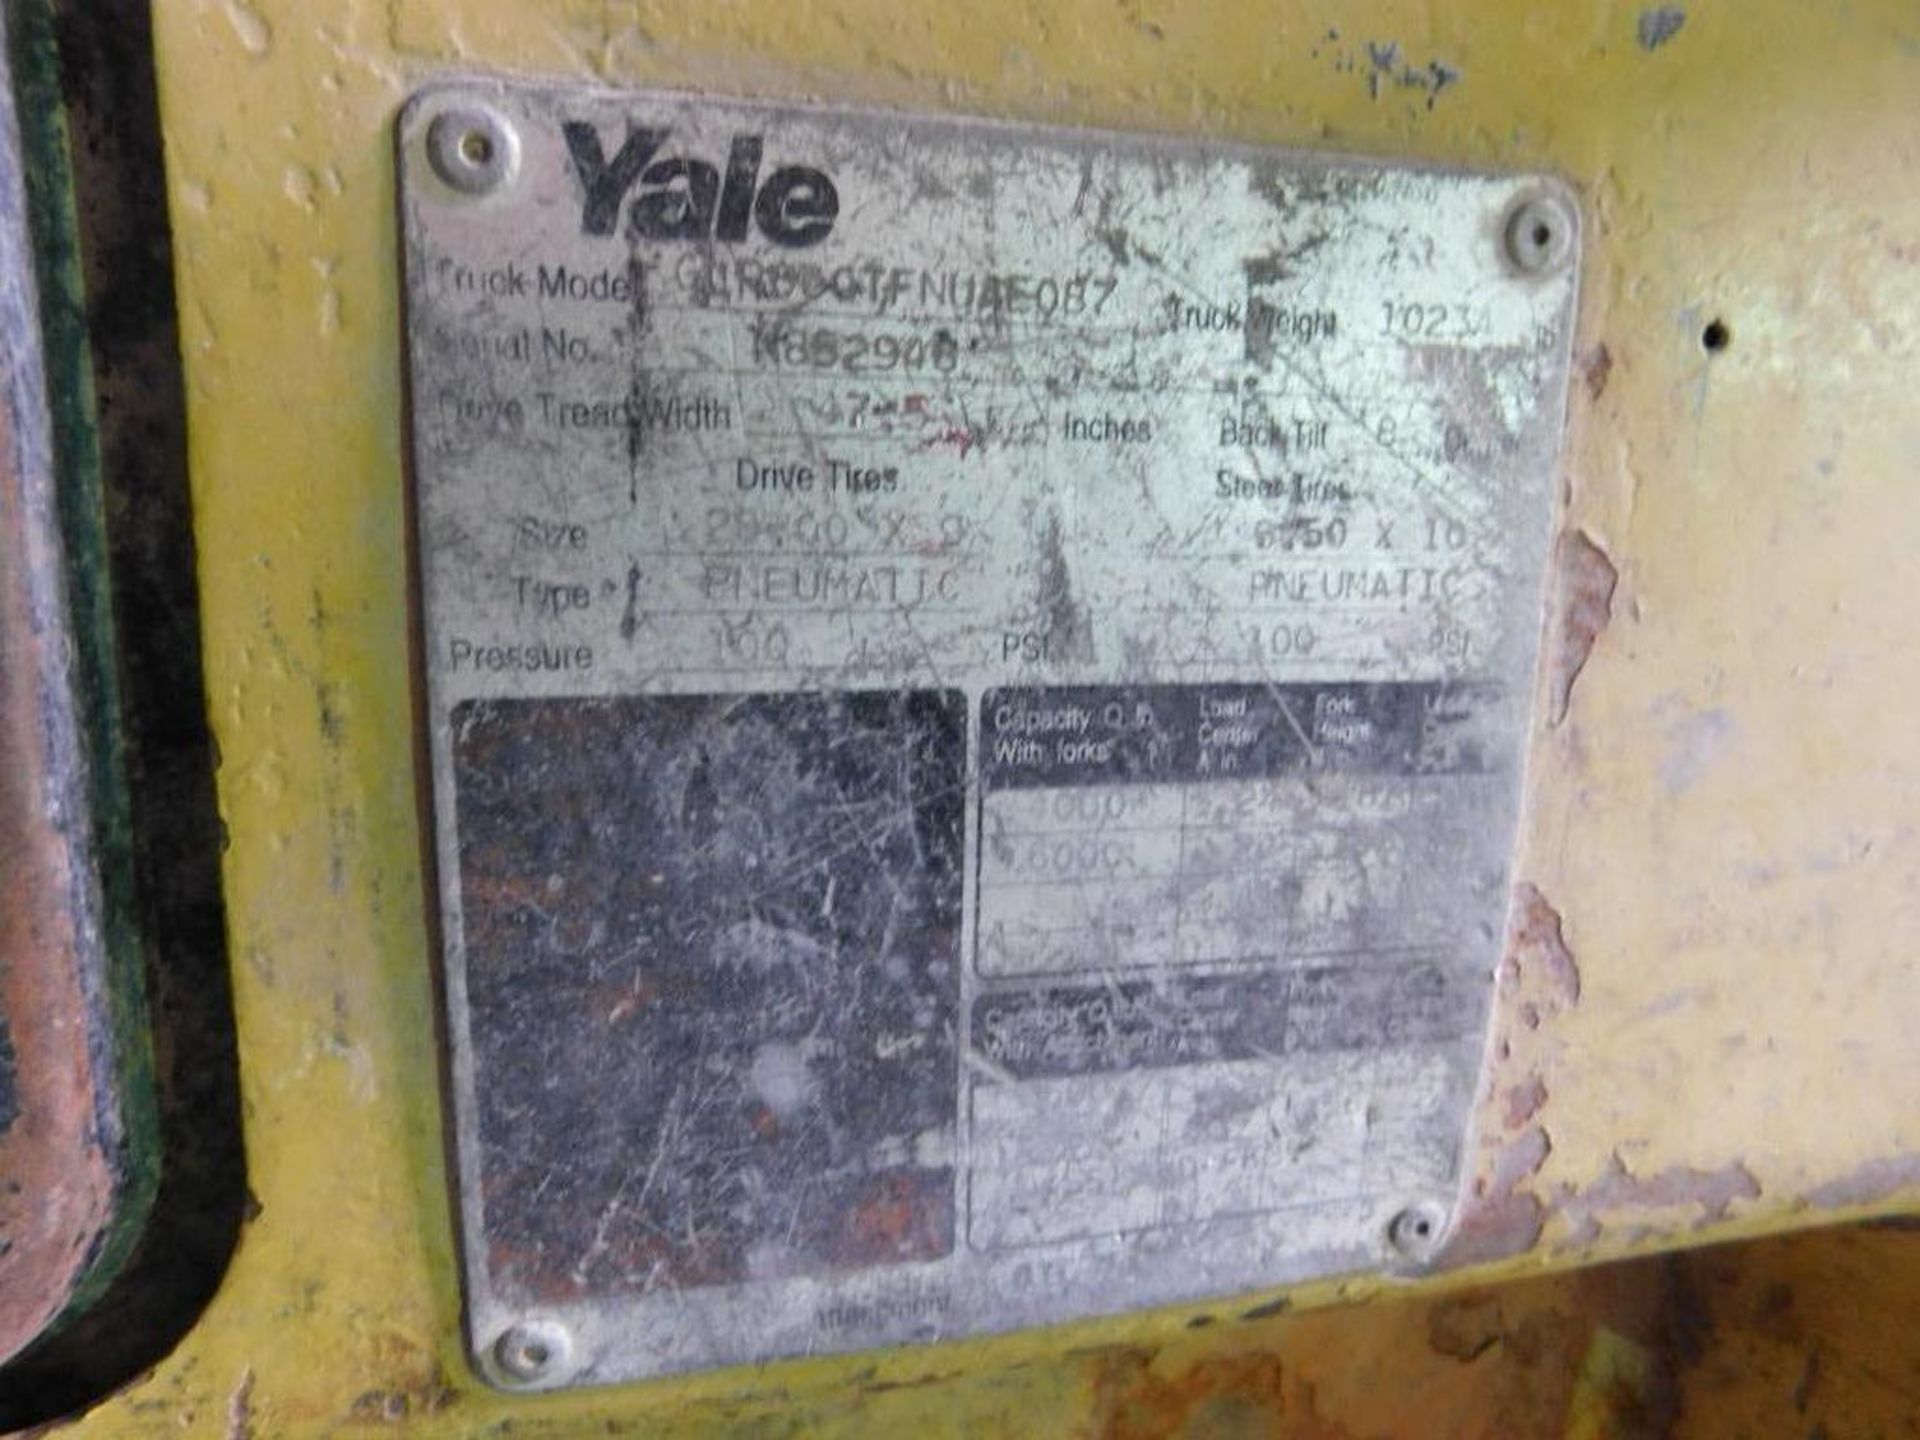 Yale 6000 lb. Gas Forklift Model G1R__OTFNUAE087, S/N N852948, Cushion Tires, Overhead Guard, 3-Stag - Image 7 of 7